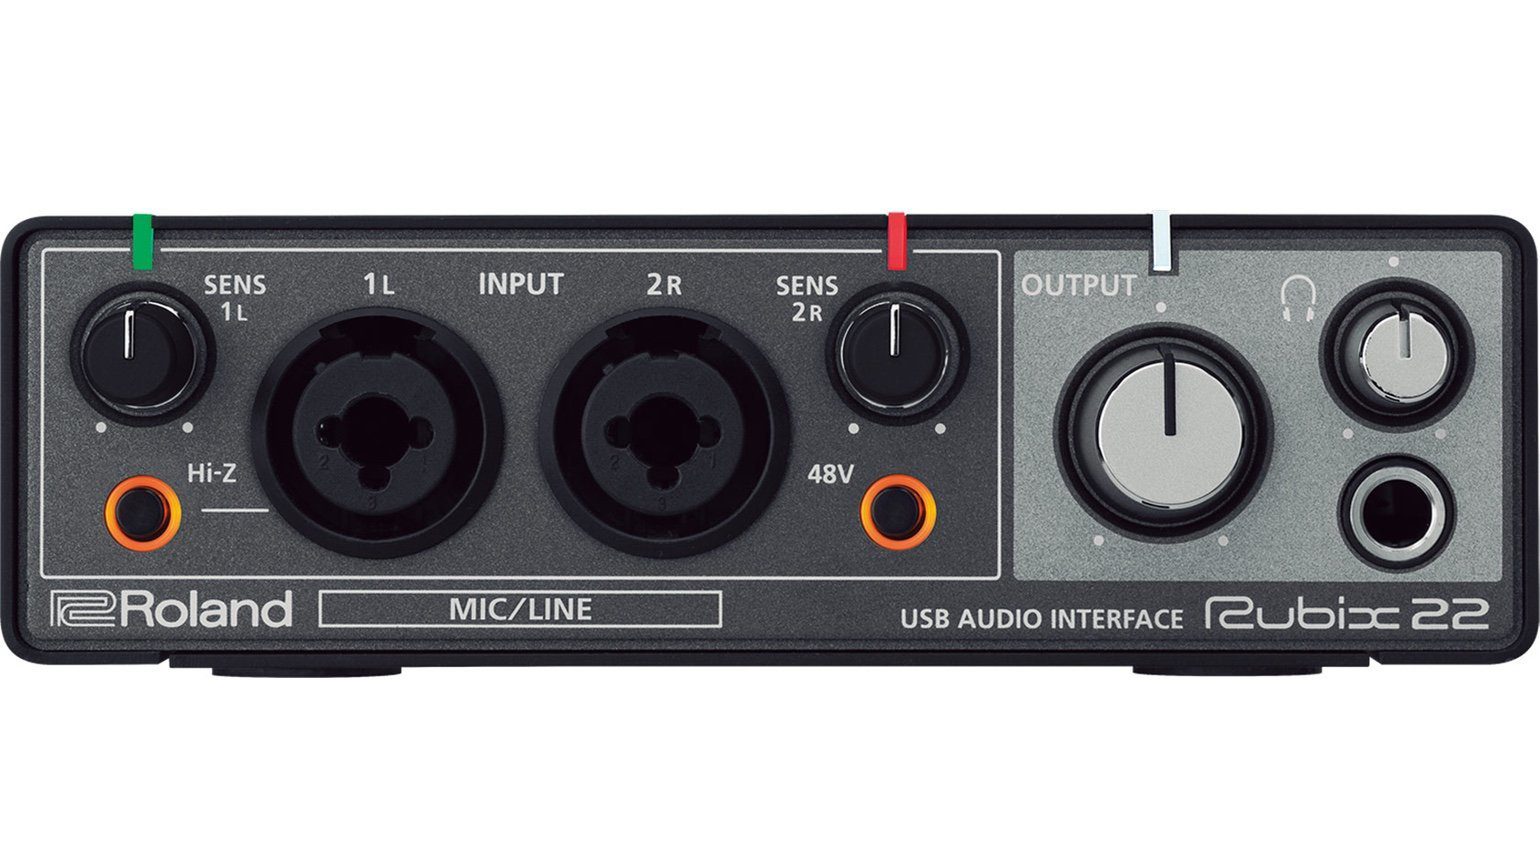 Roland Rubix22 USB Audiointerface Front